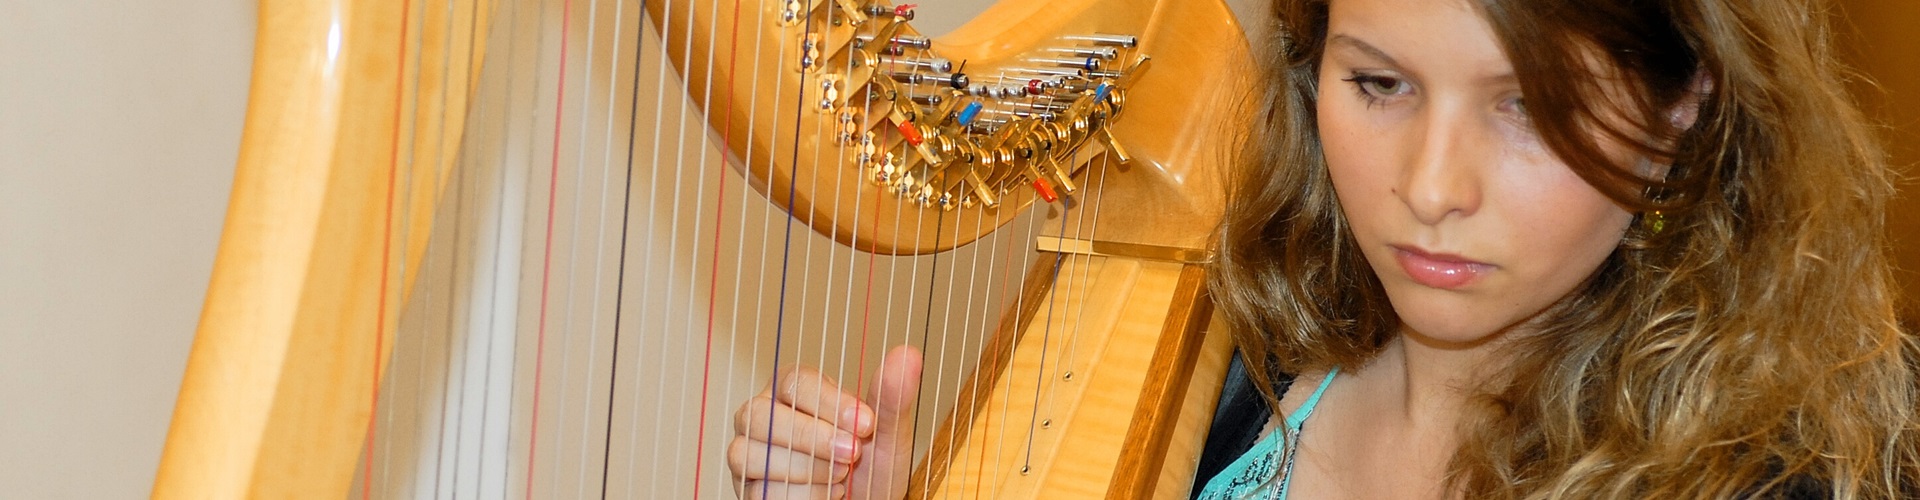 Learn Harp, Harp lessons